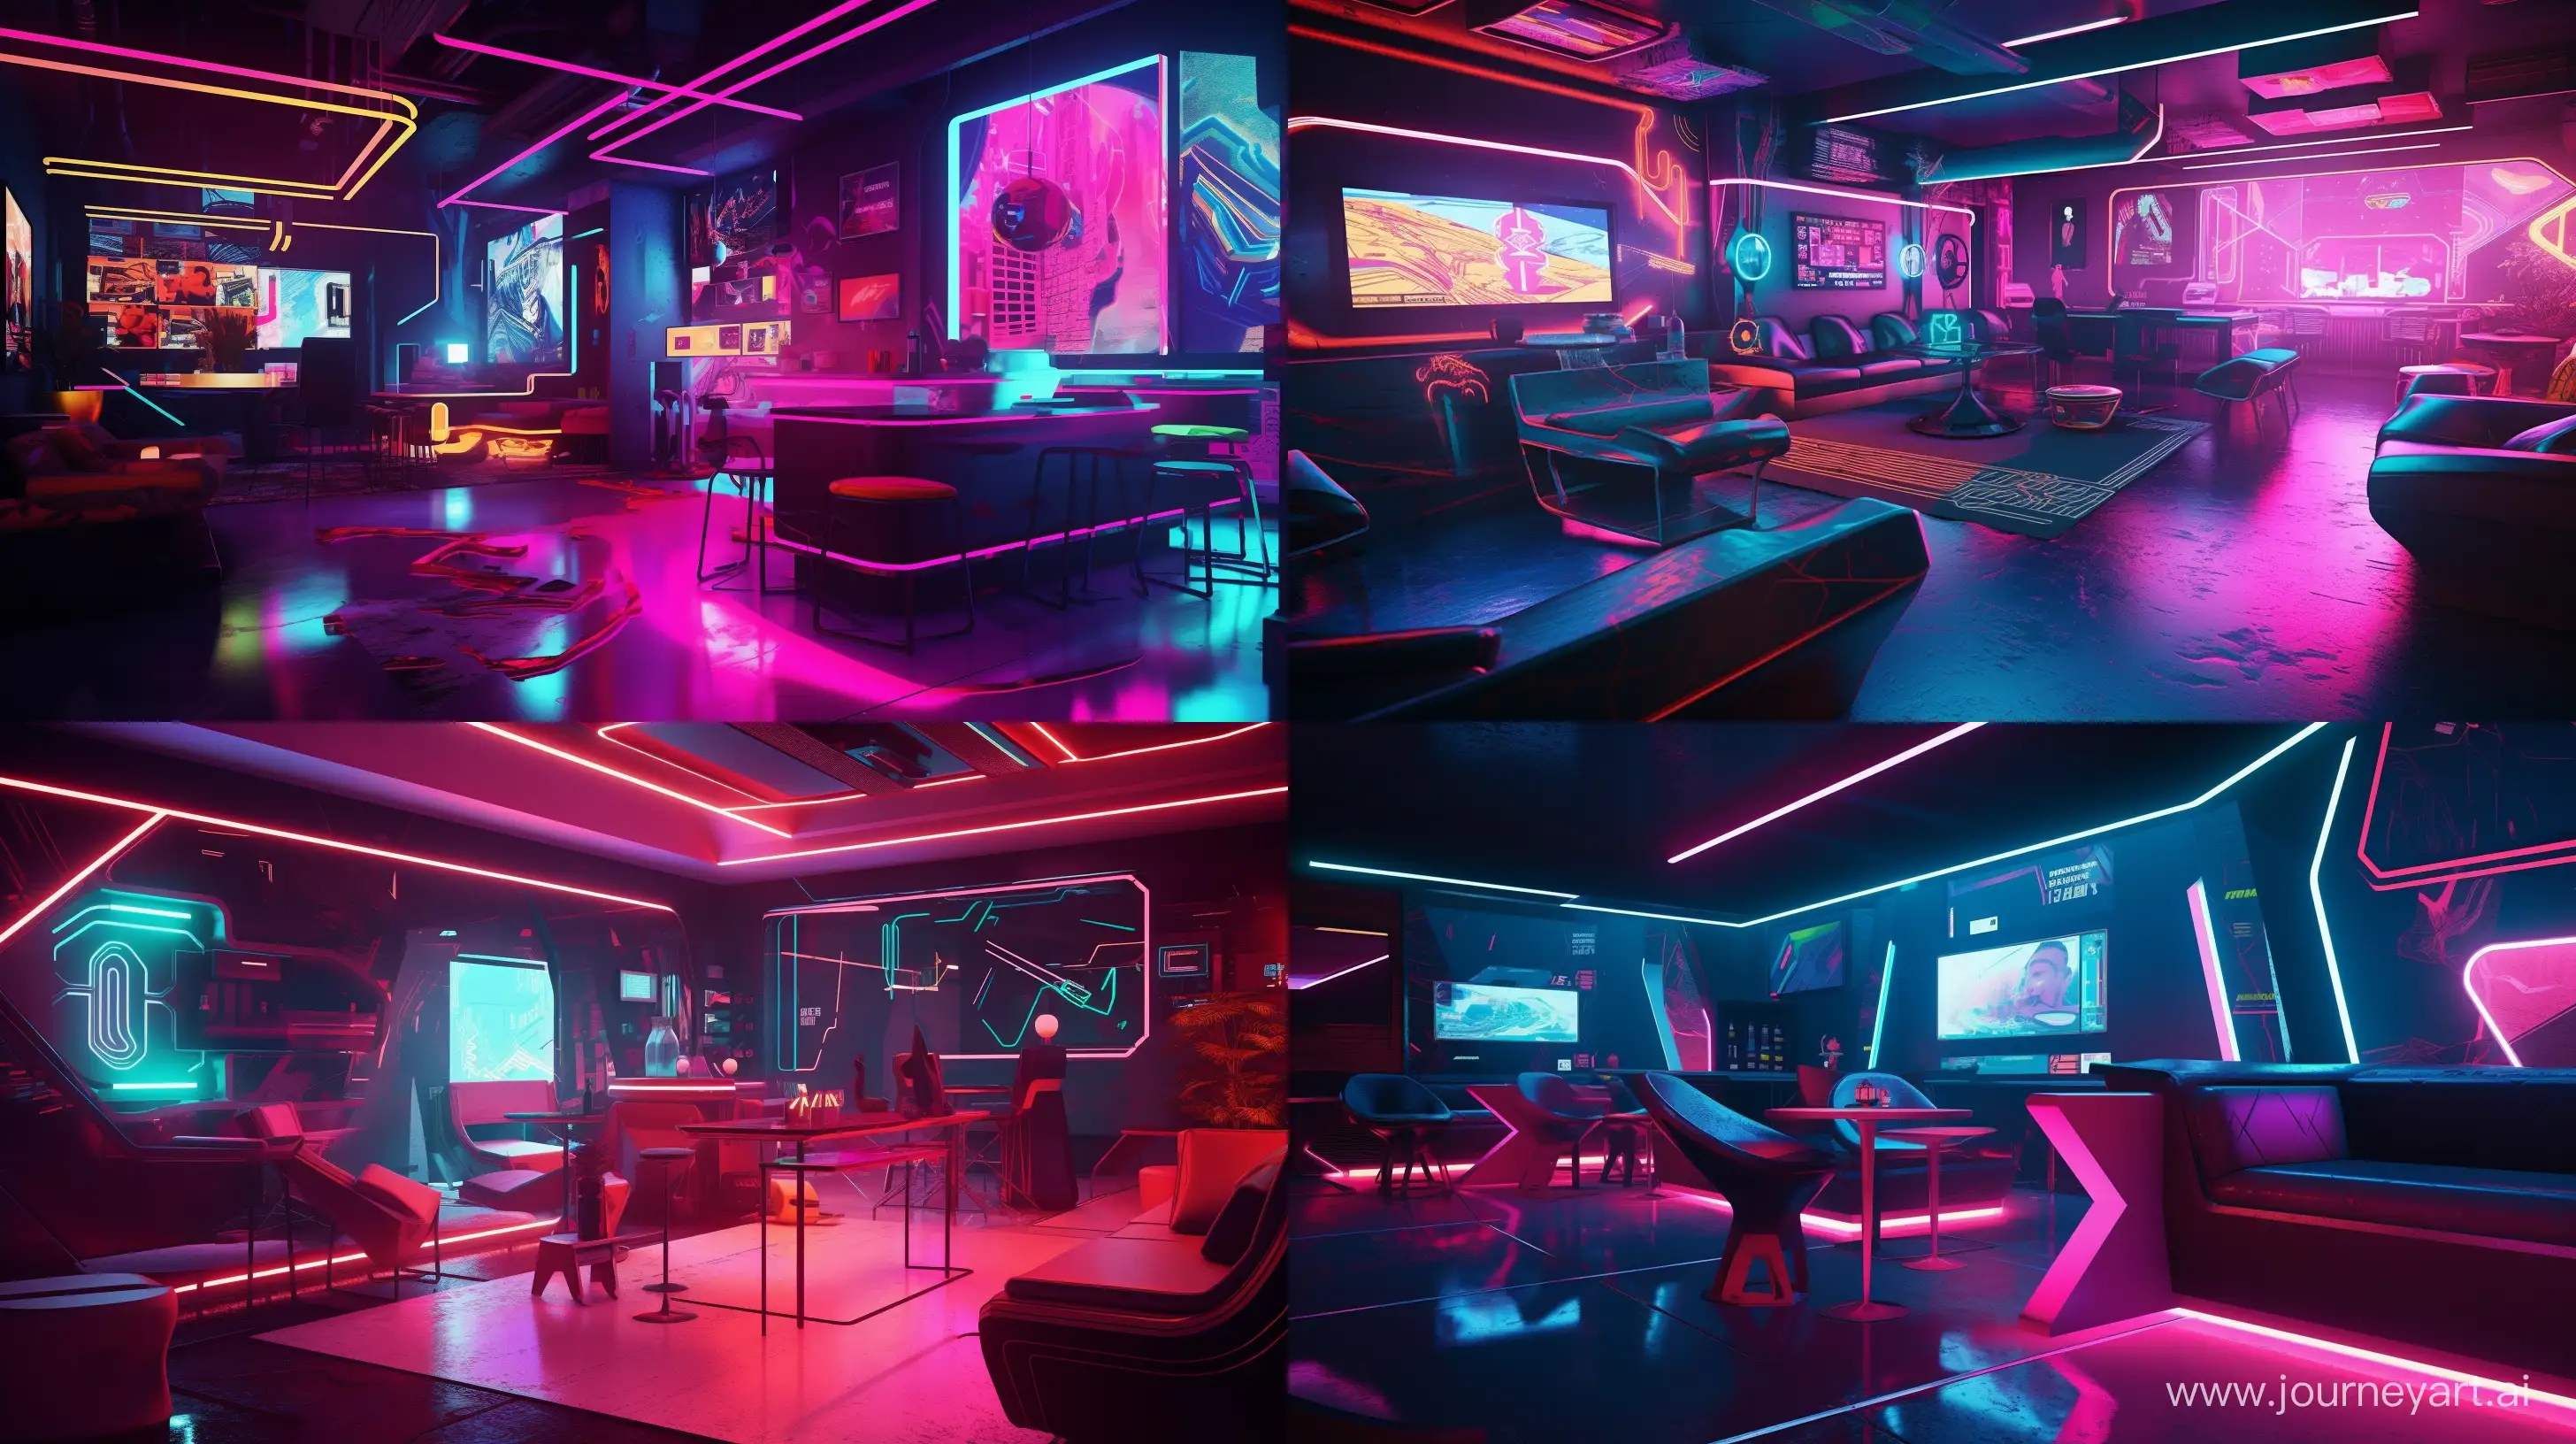 Futuristic-Cyberpunk-Interior-with-Vibrant-RapiDwm-Neon-Display